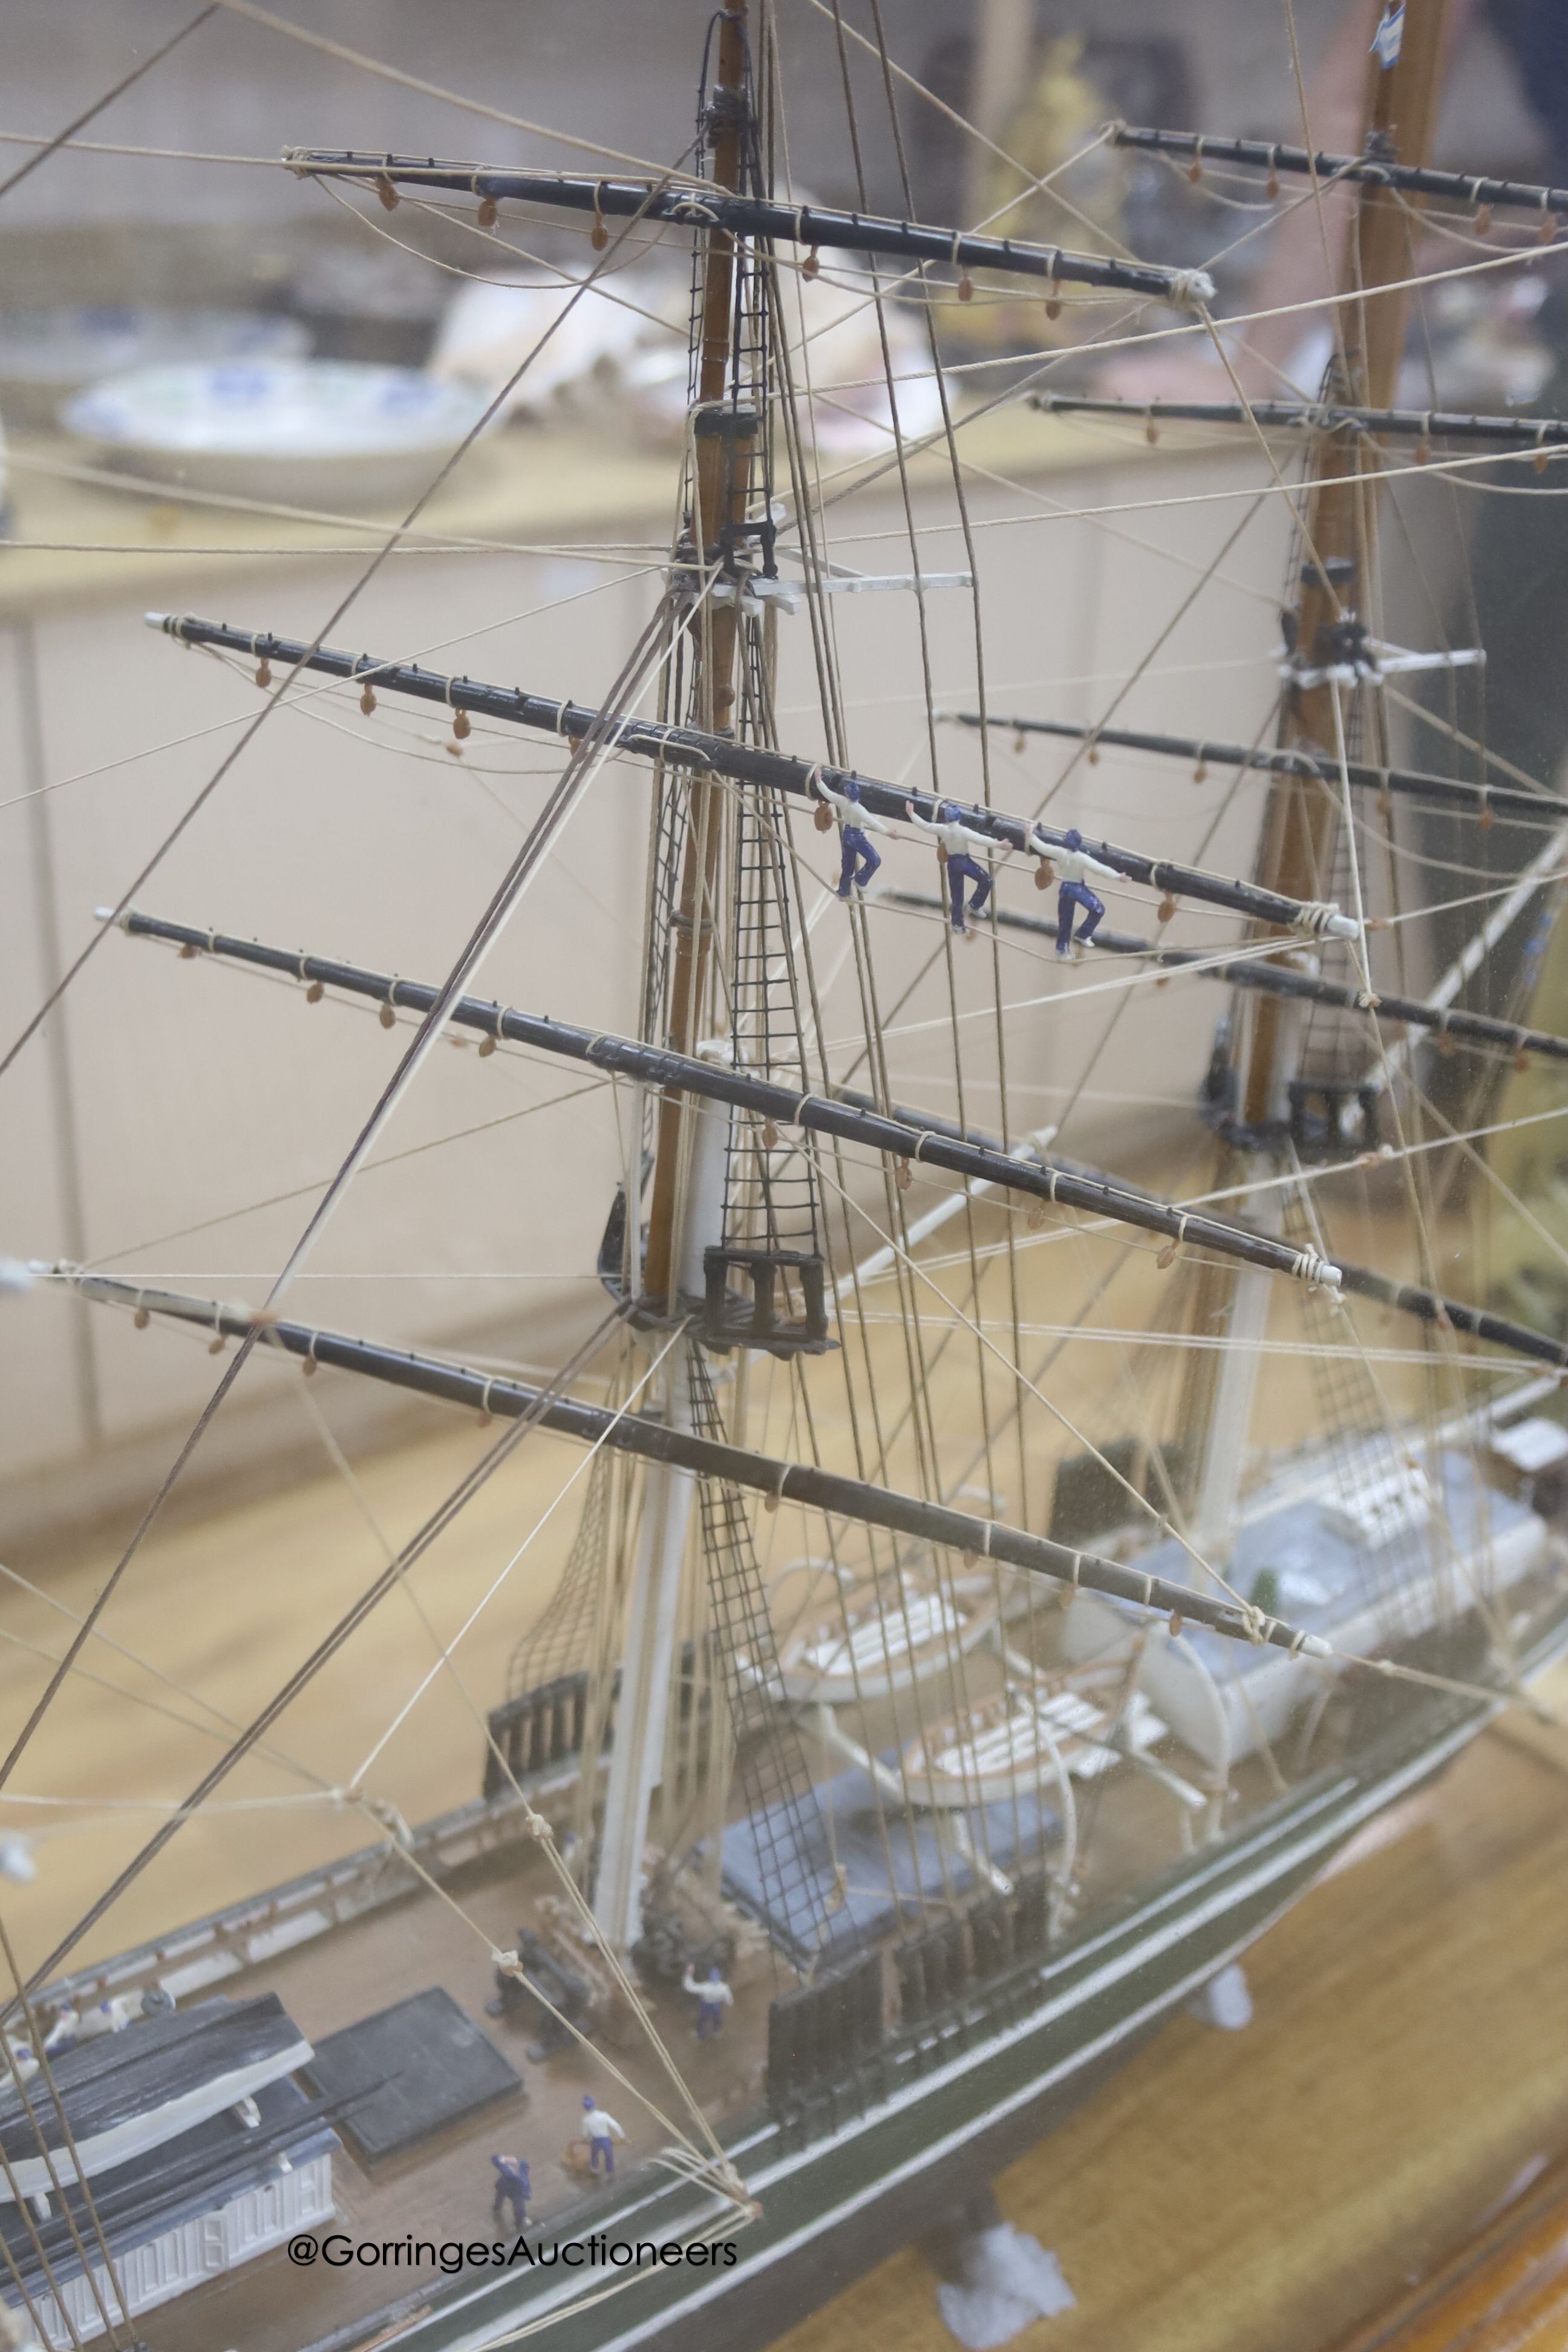 A model of a clipper ship in glazed case